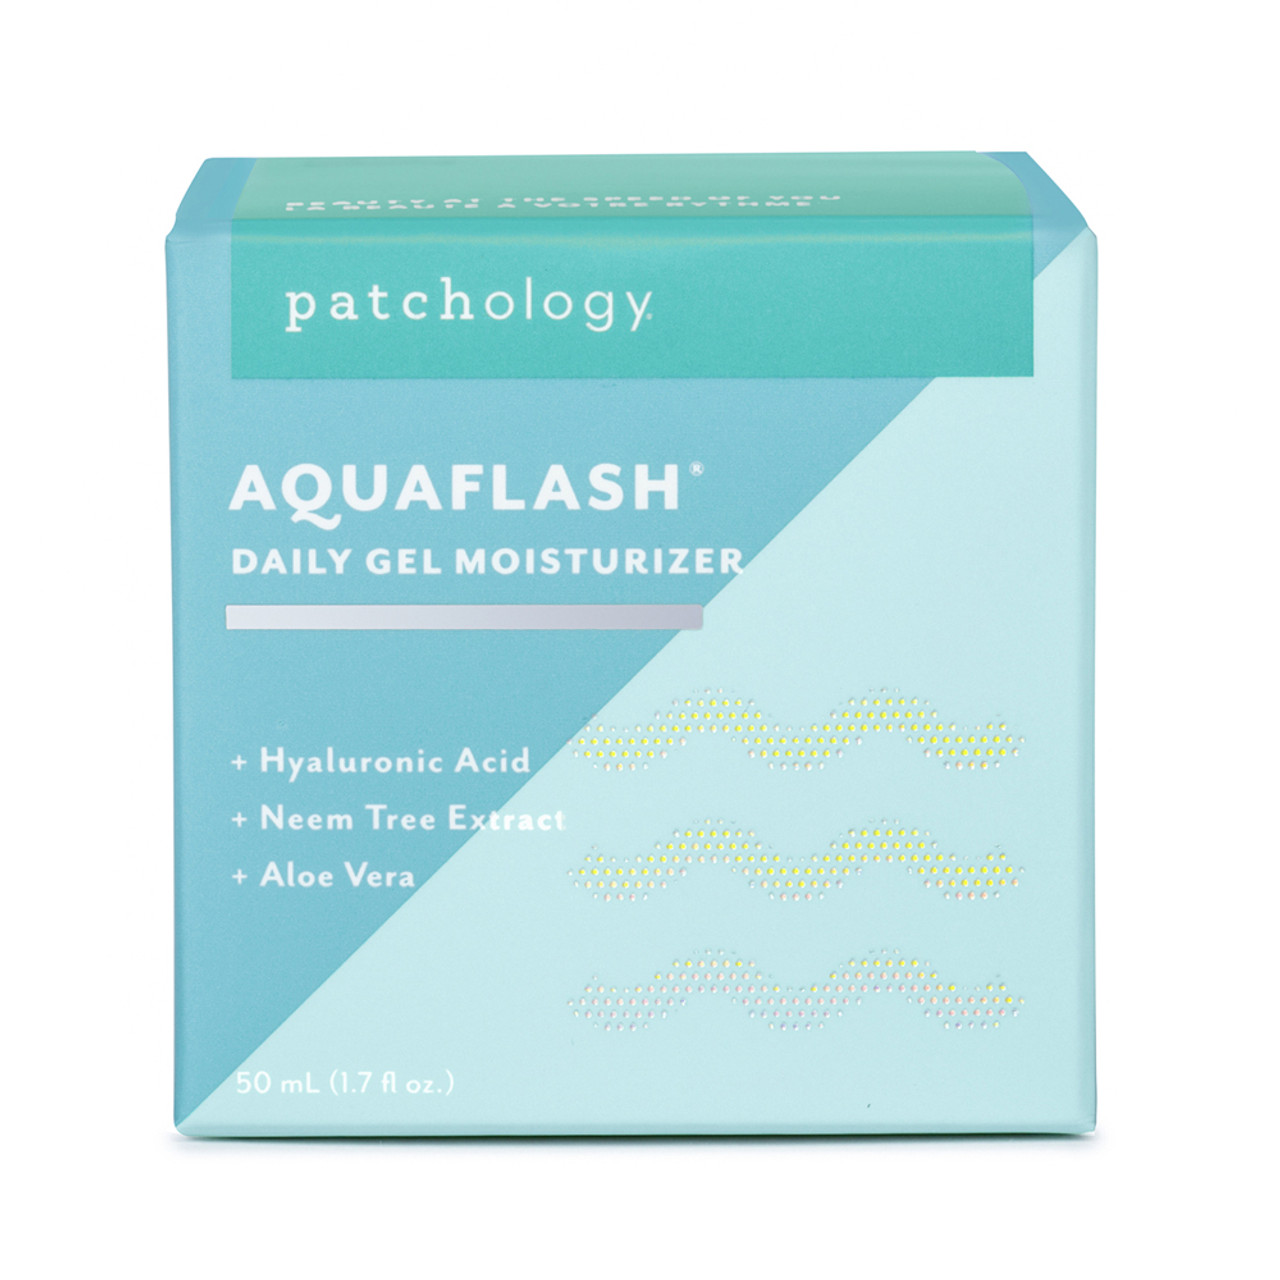 Patchology AquaFlash Daily Gel Moisturizer (discontinued) BeautifiedYou.com